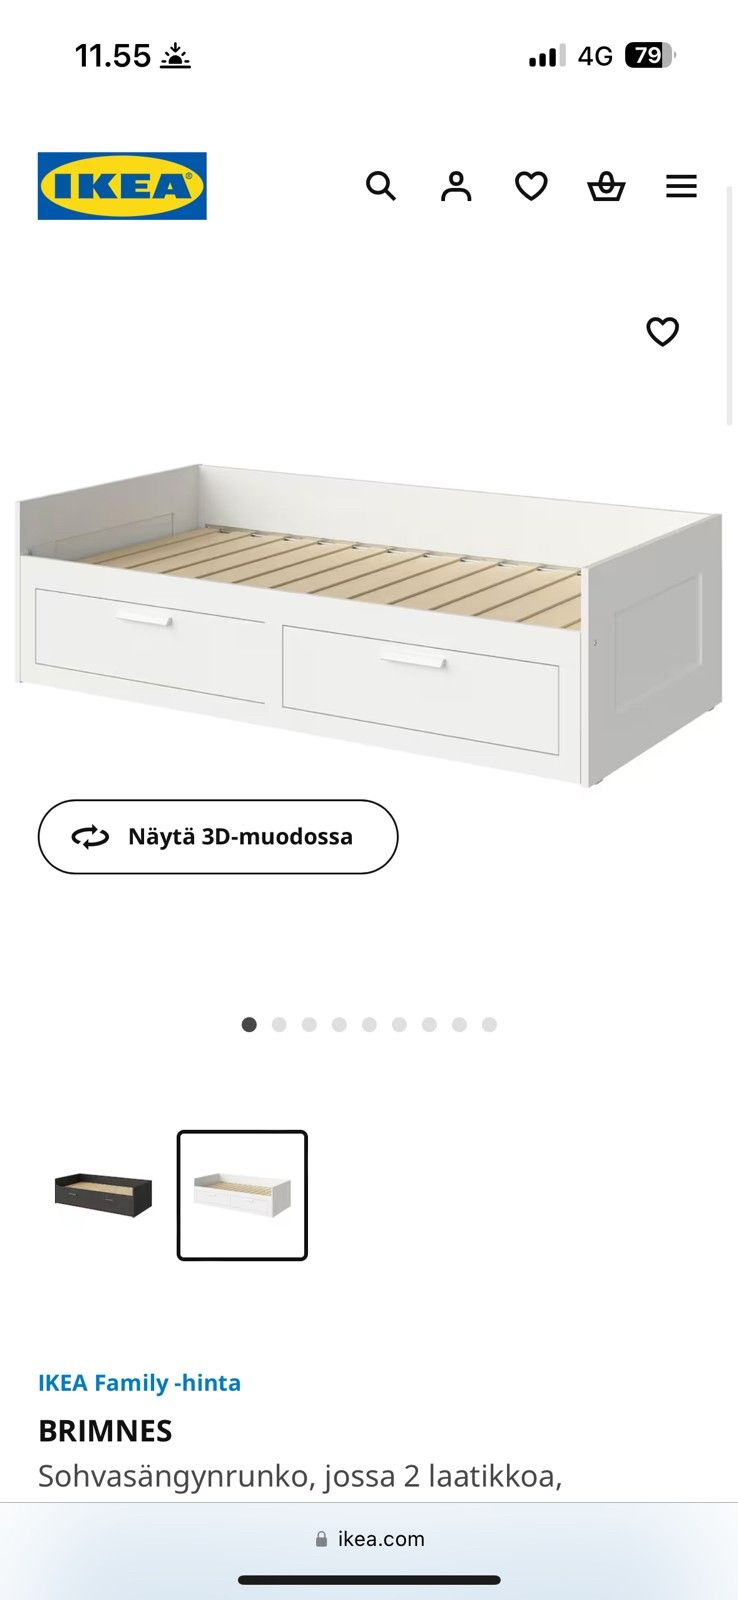 IKEA Brimnes sänky